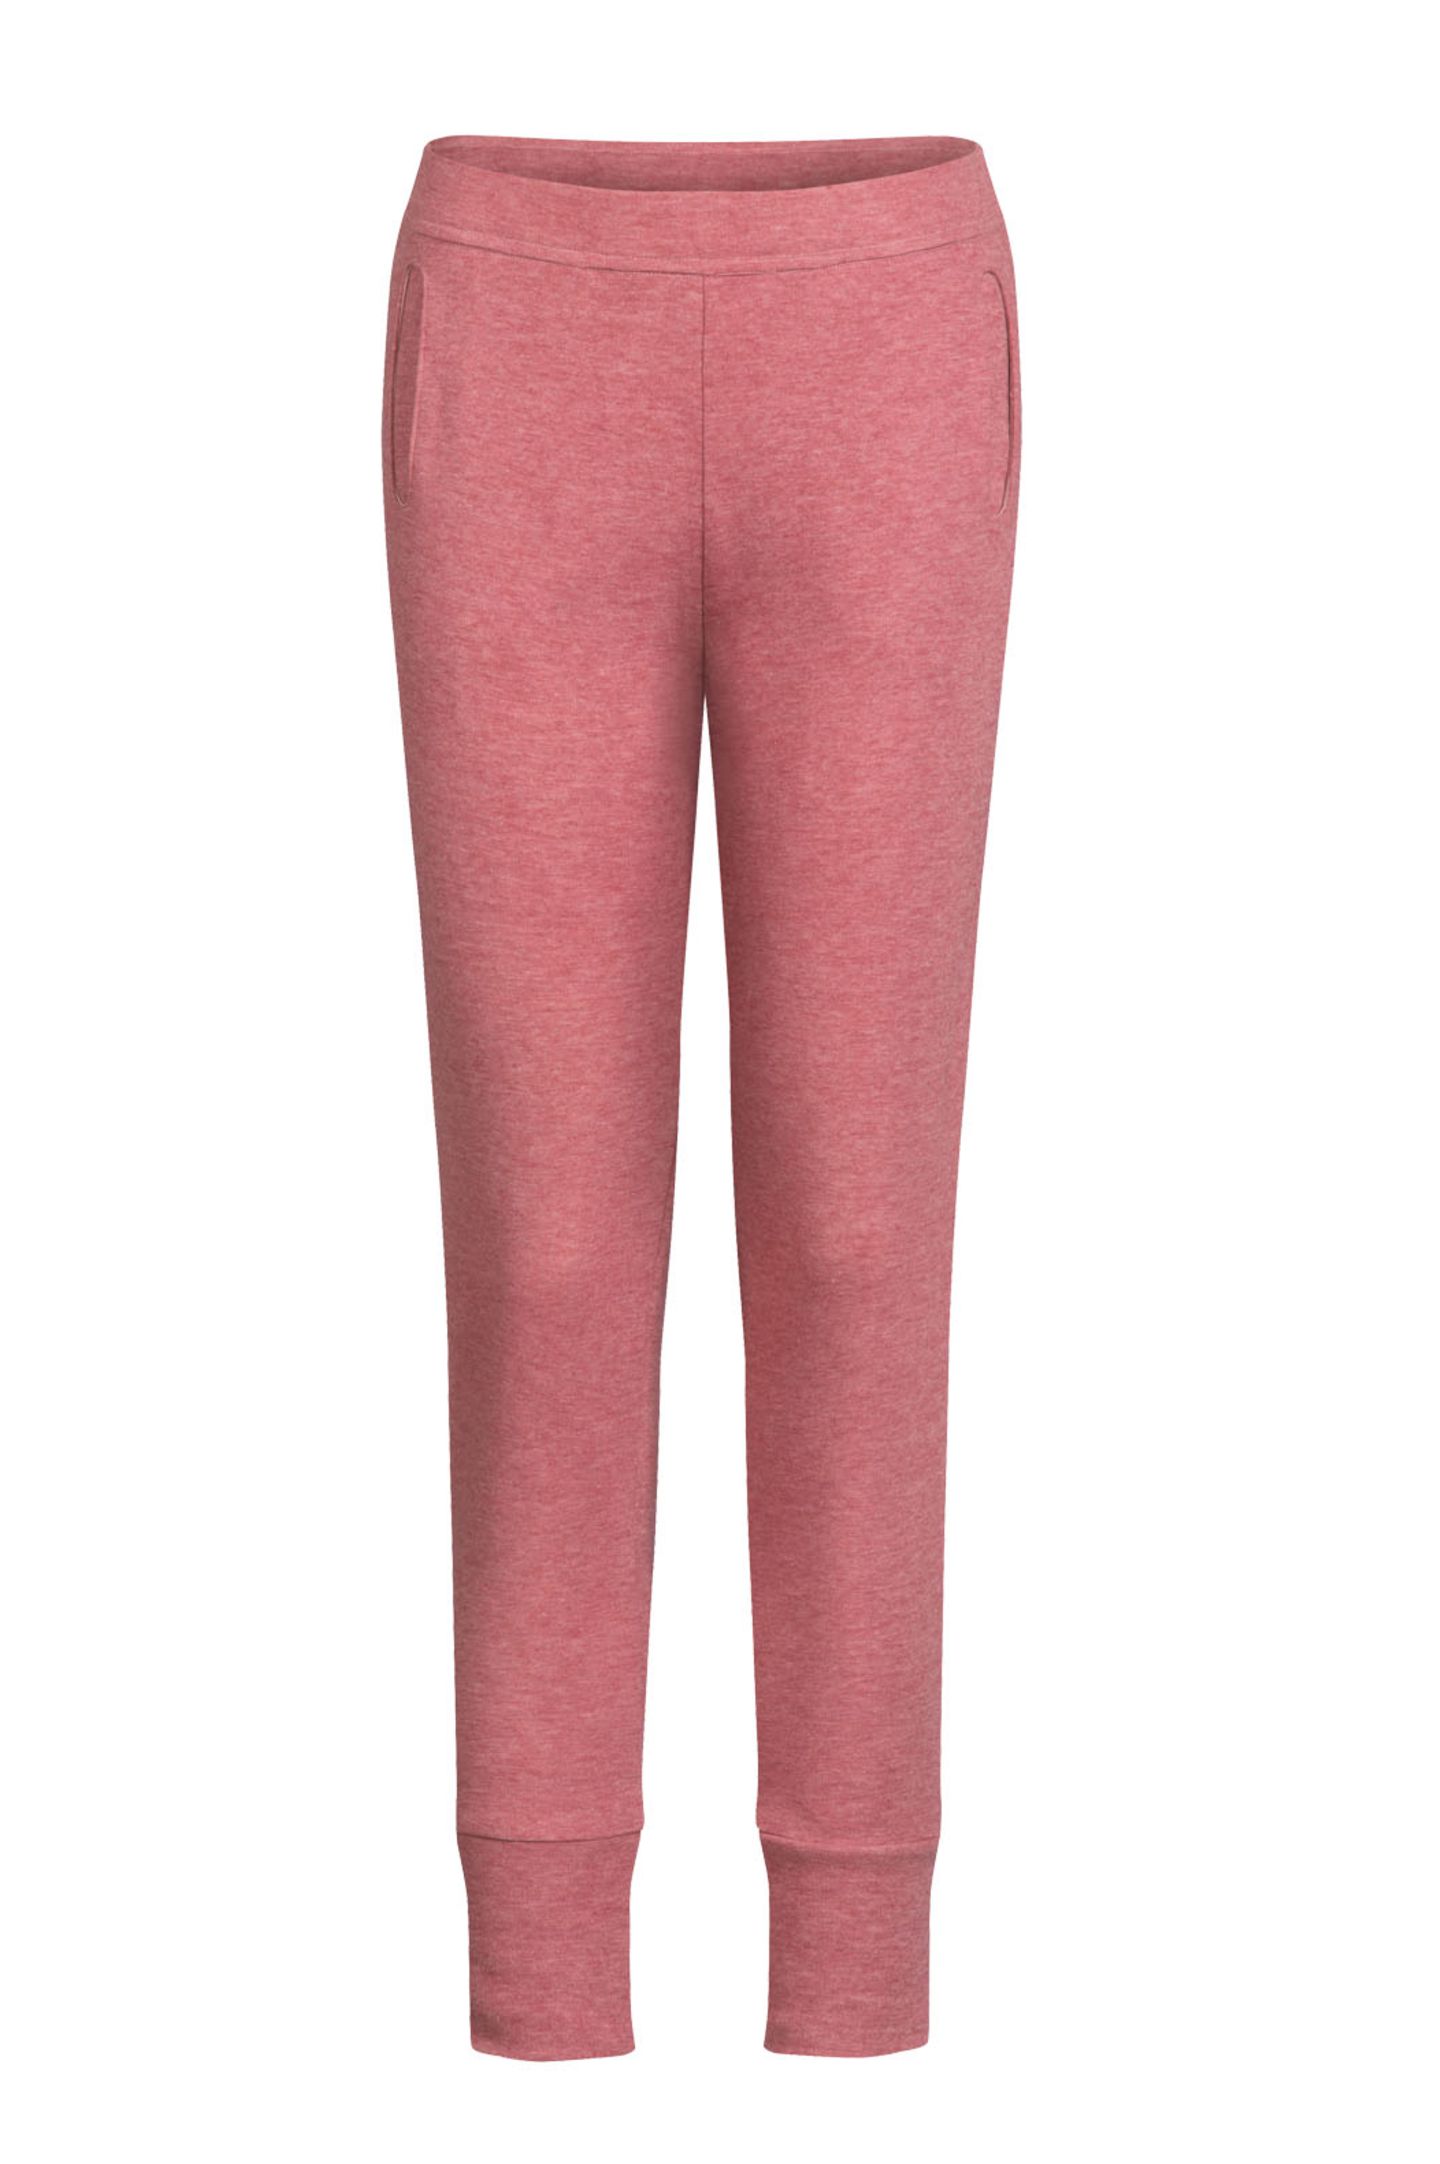 Pink Pants: Hose von Greentee, ca. 150 Euro